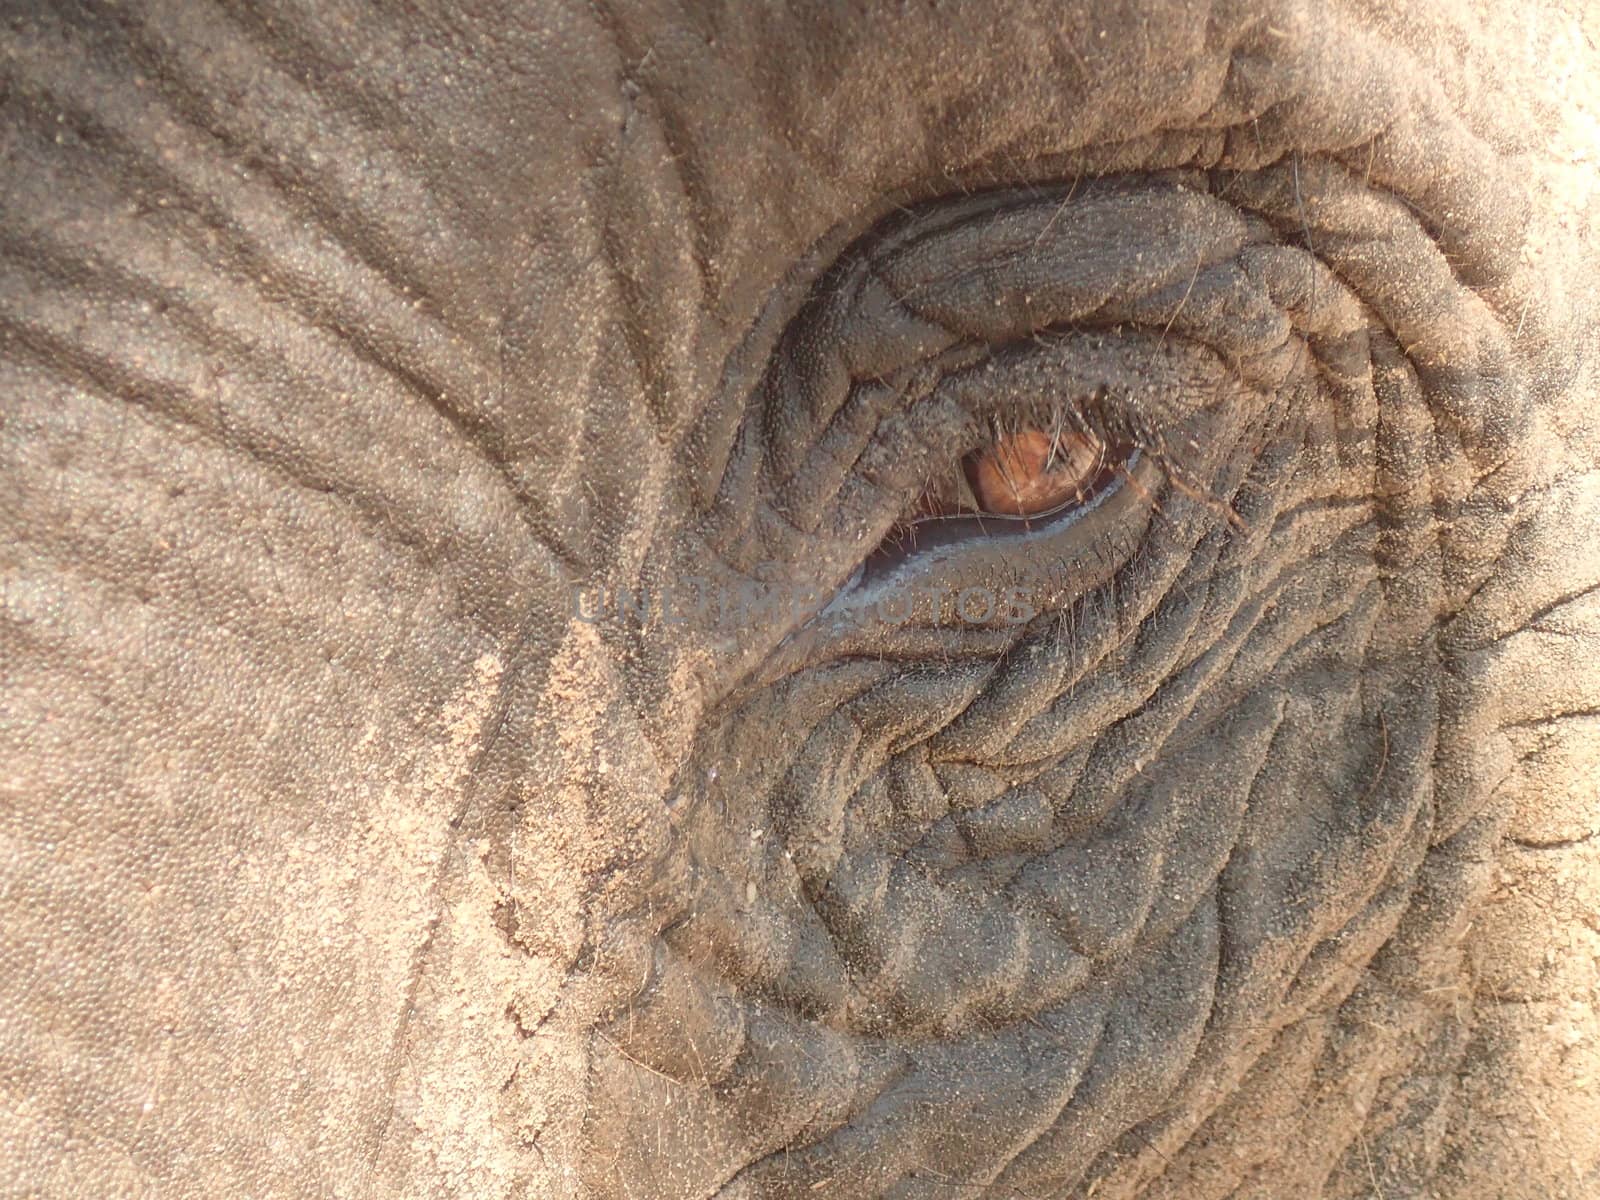 Elephant eye by the_jade_greene